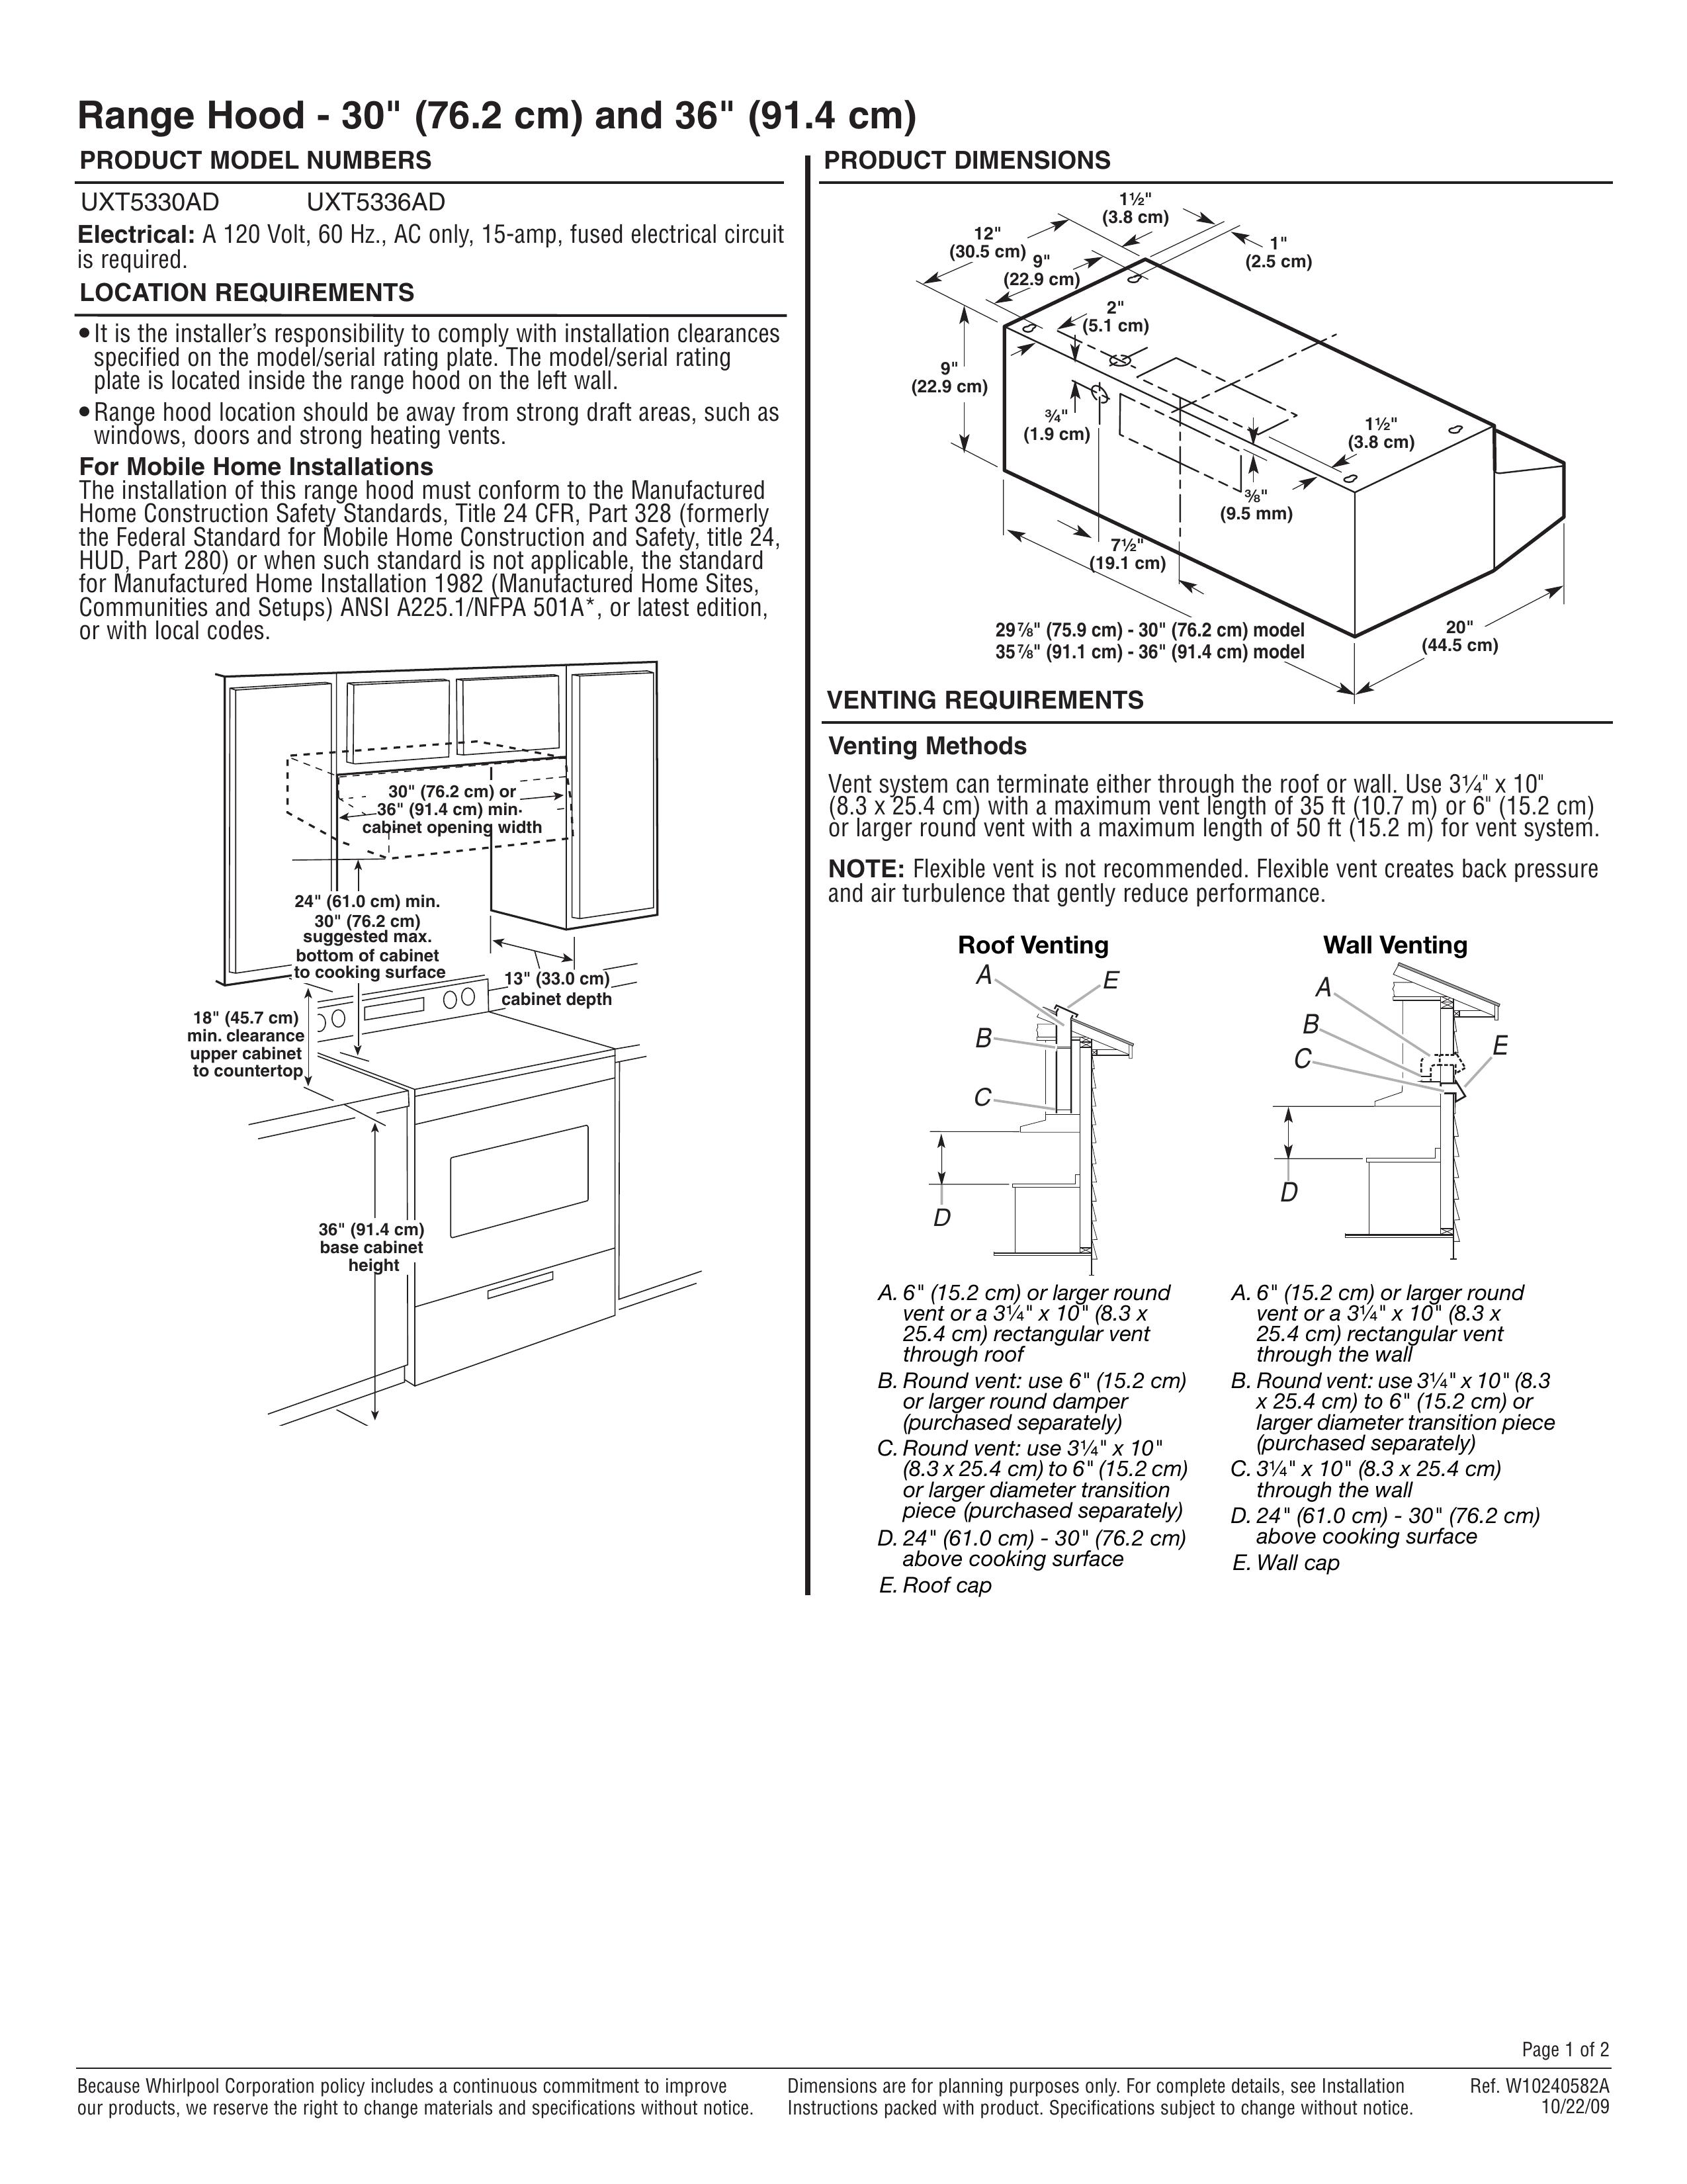 Amana UXT5336AD Ventilation Hood User Manual